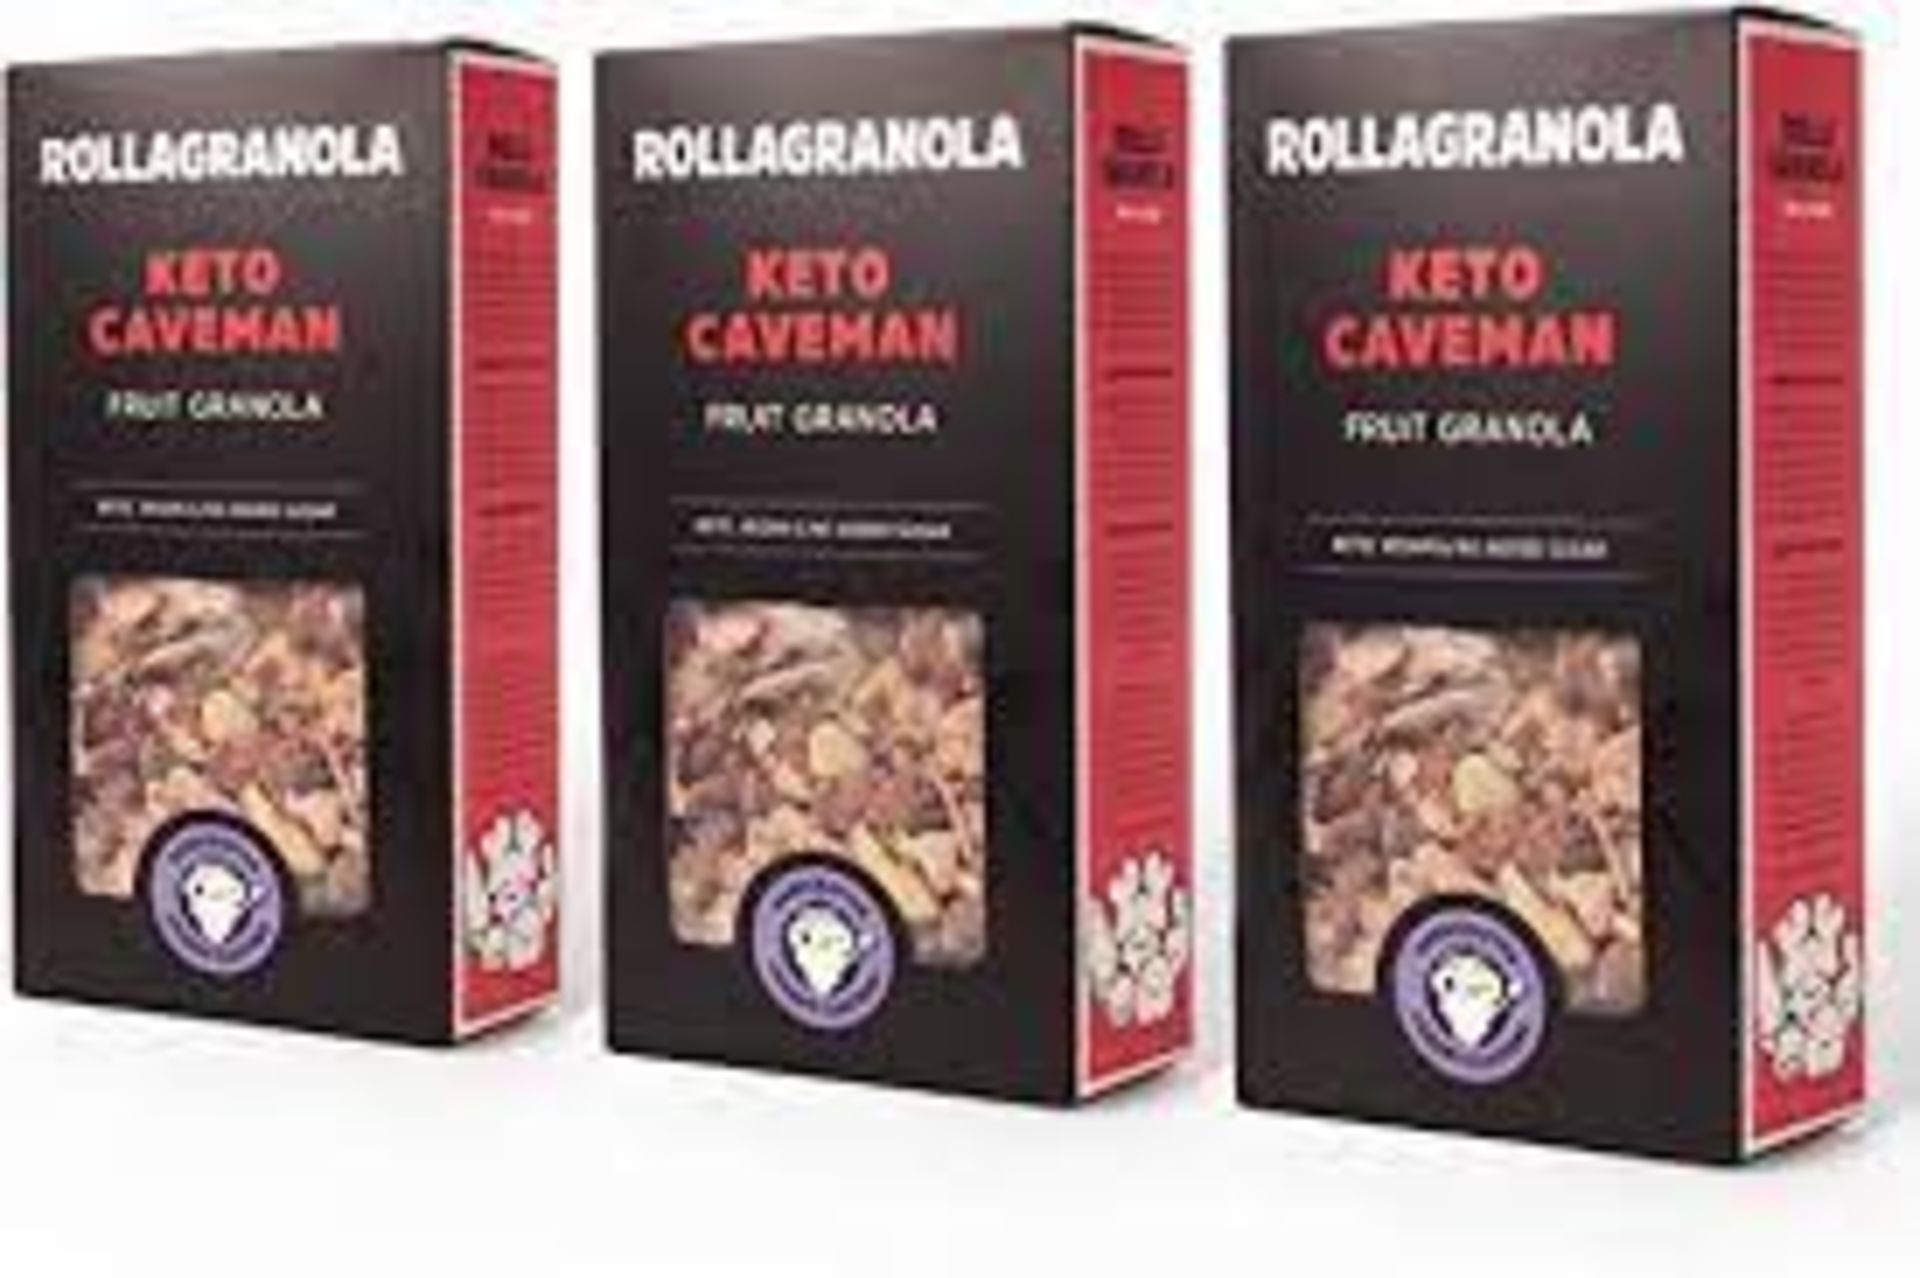 RRP £1961 (Approx. Count 136) Spw12C9491Y ""Rollagranola Keto Caveman Fruit Granola, Paleo, Vegan,